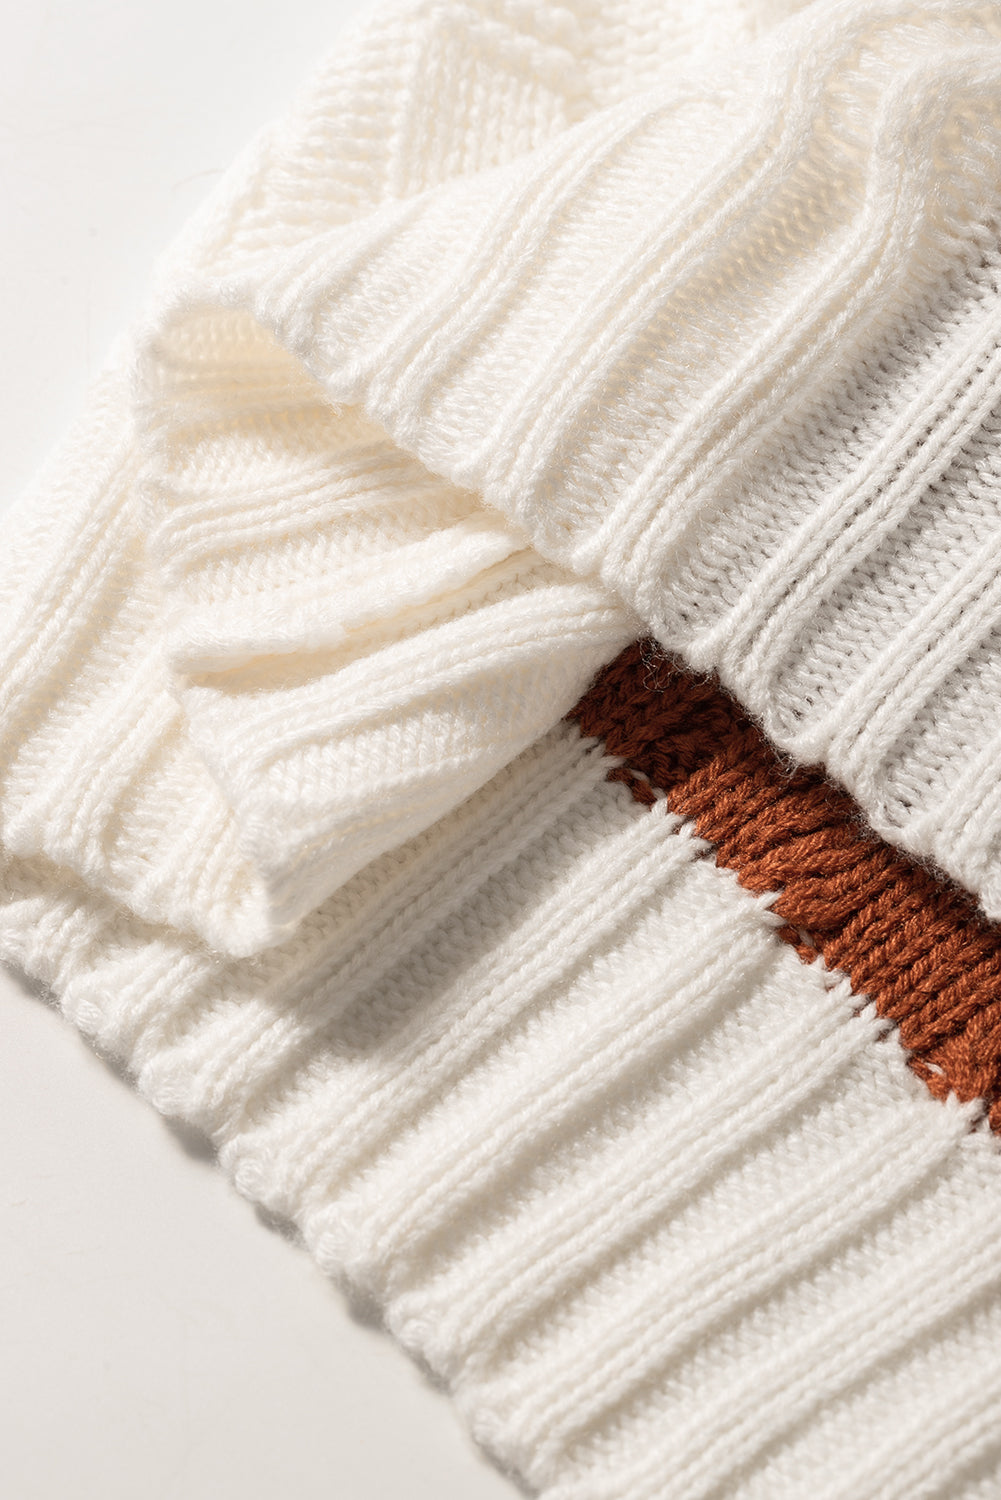 Multicolor Colorblock Mix Texture Knit Sweater